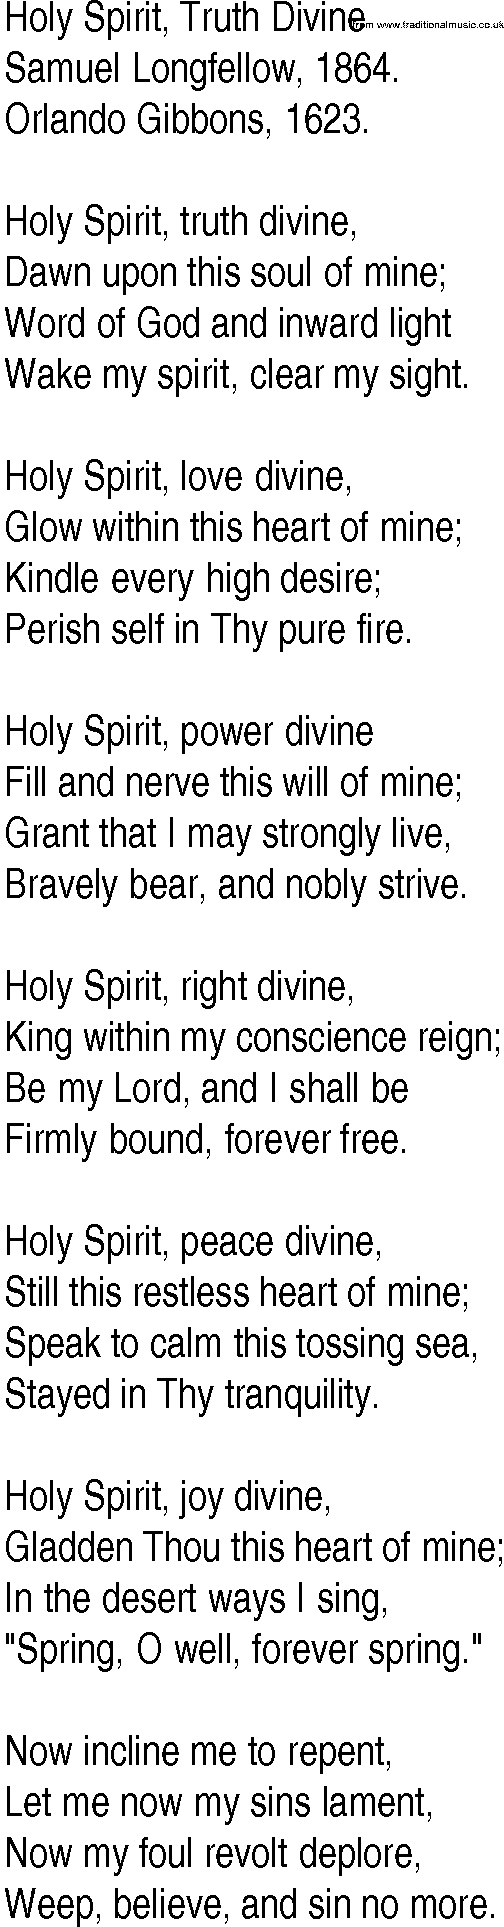 Hymn and Gospel Song: Holy Spirit, Truth Divine by Samuel Longfellow lyrics